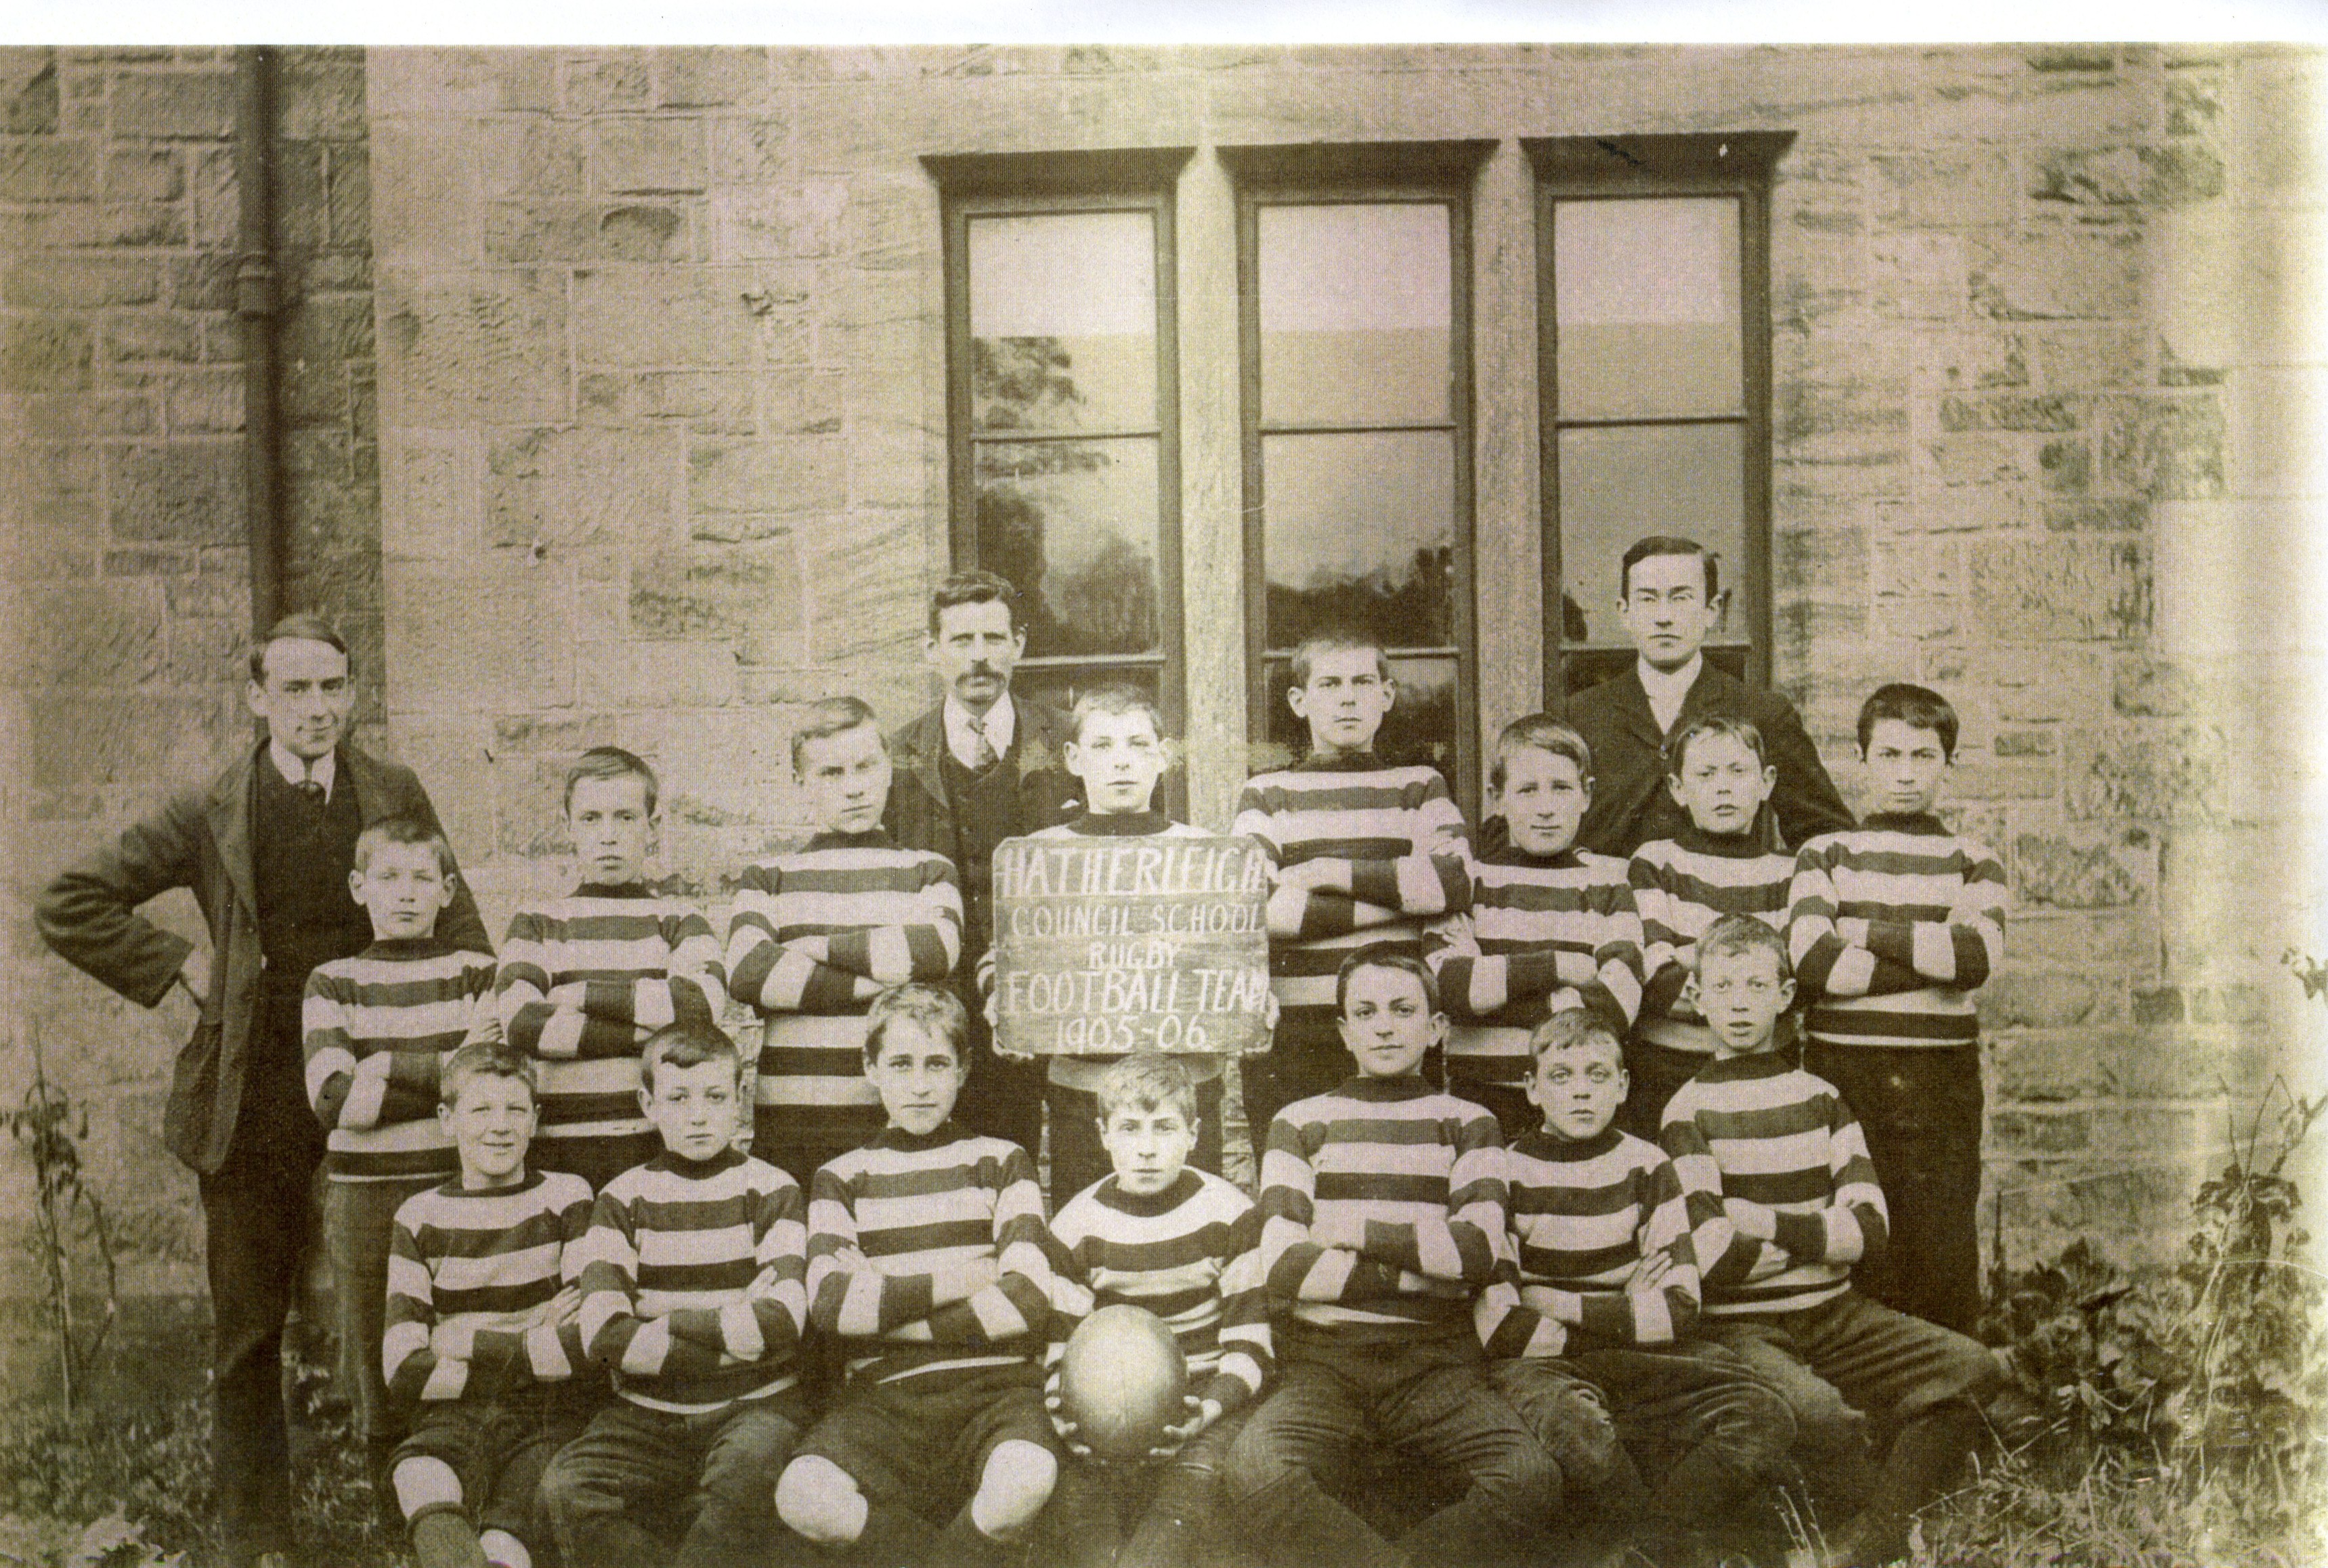 Hatherleigh School football team 1905-6